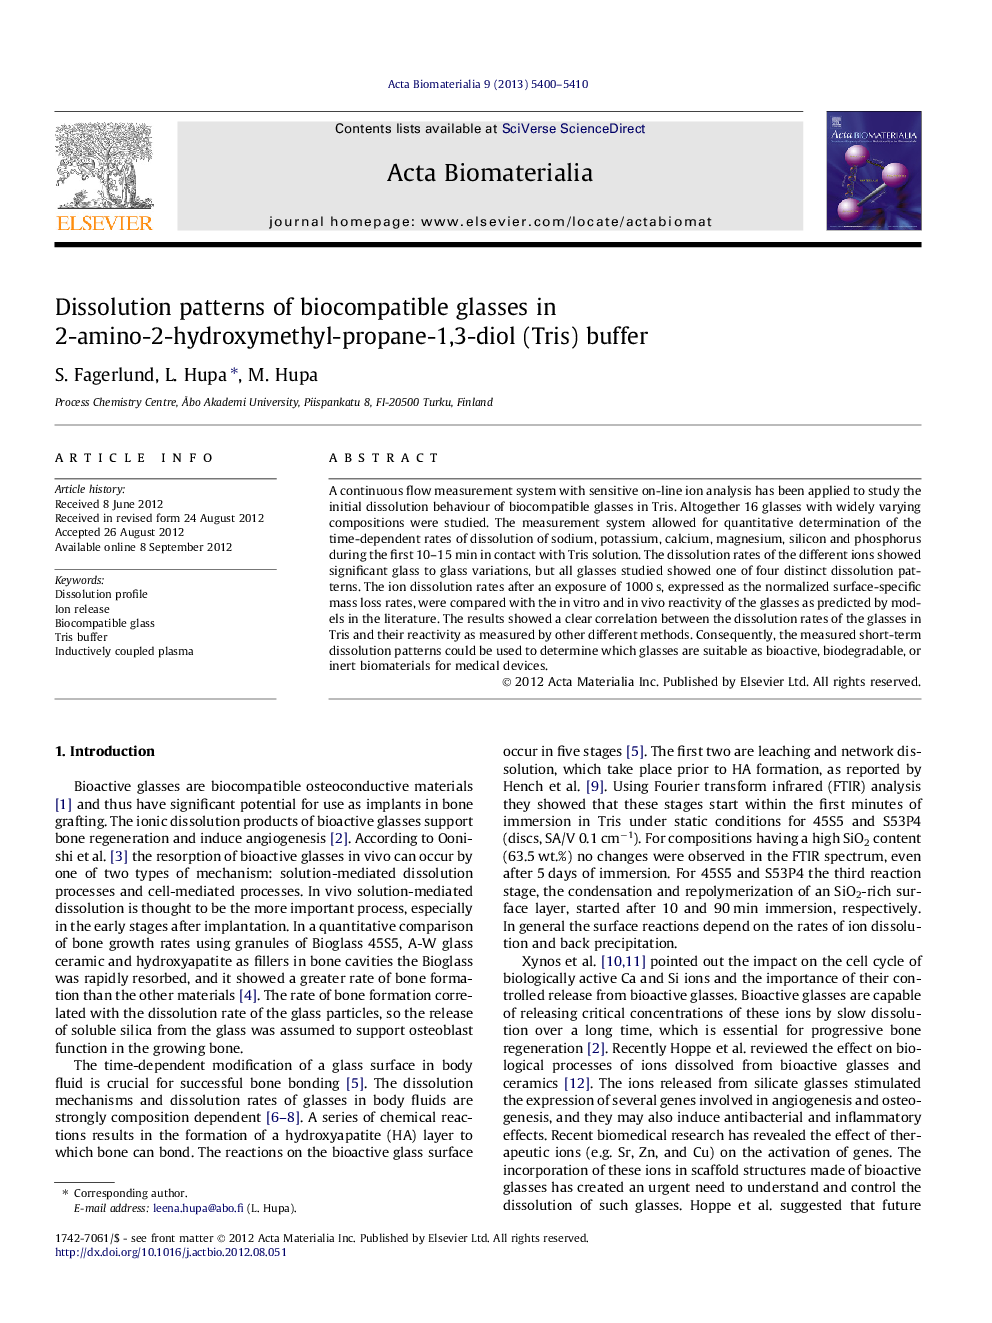 Dissolution patterns of biocompatible glasses in 2-amino-2-hydroxymethyl-propane-1,3-diol (Tris) buffer